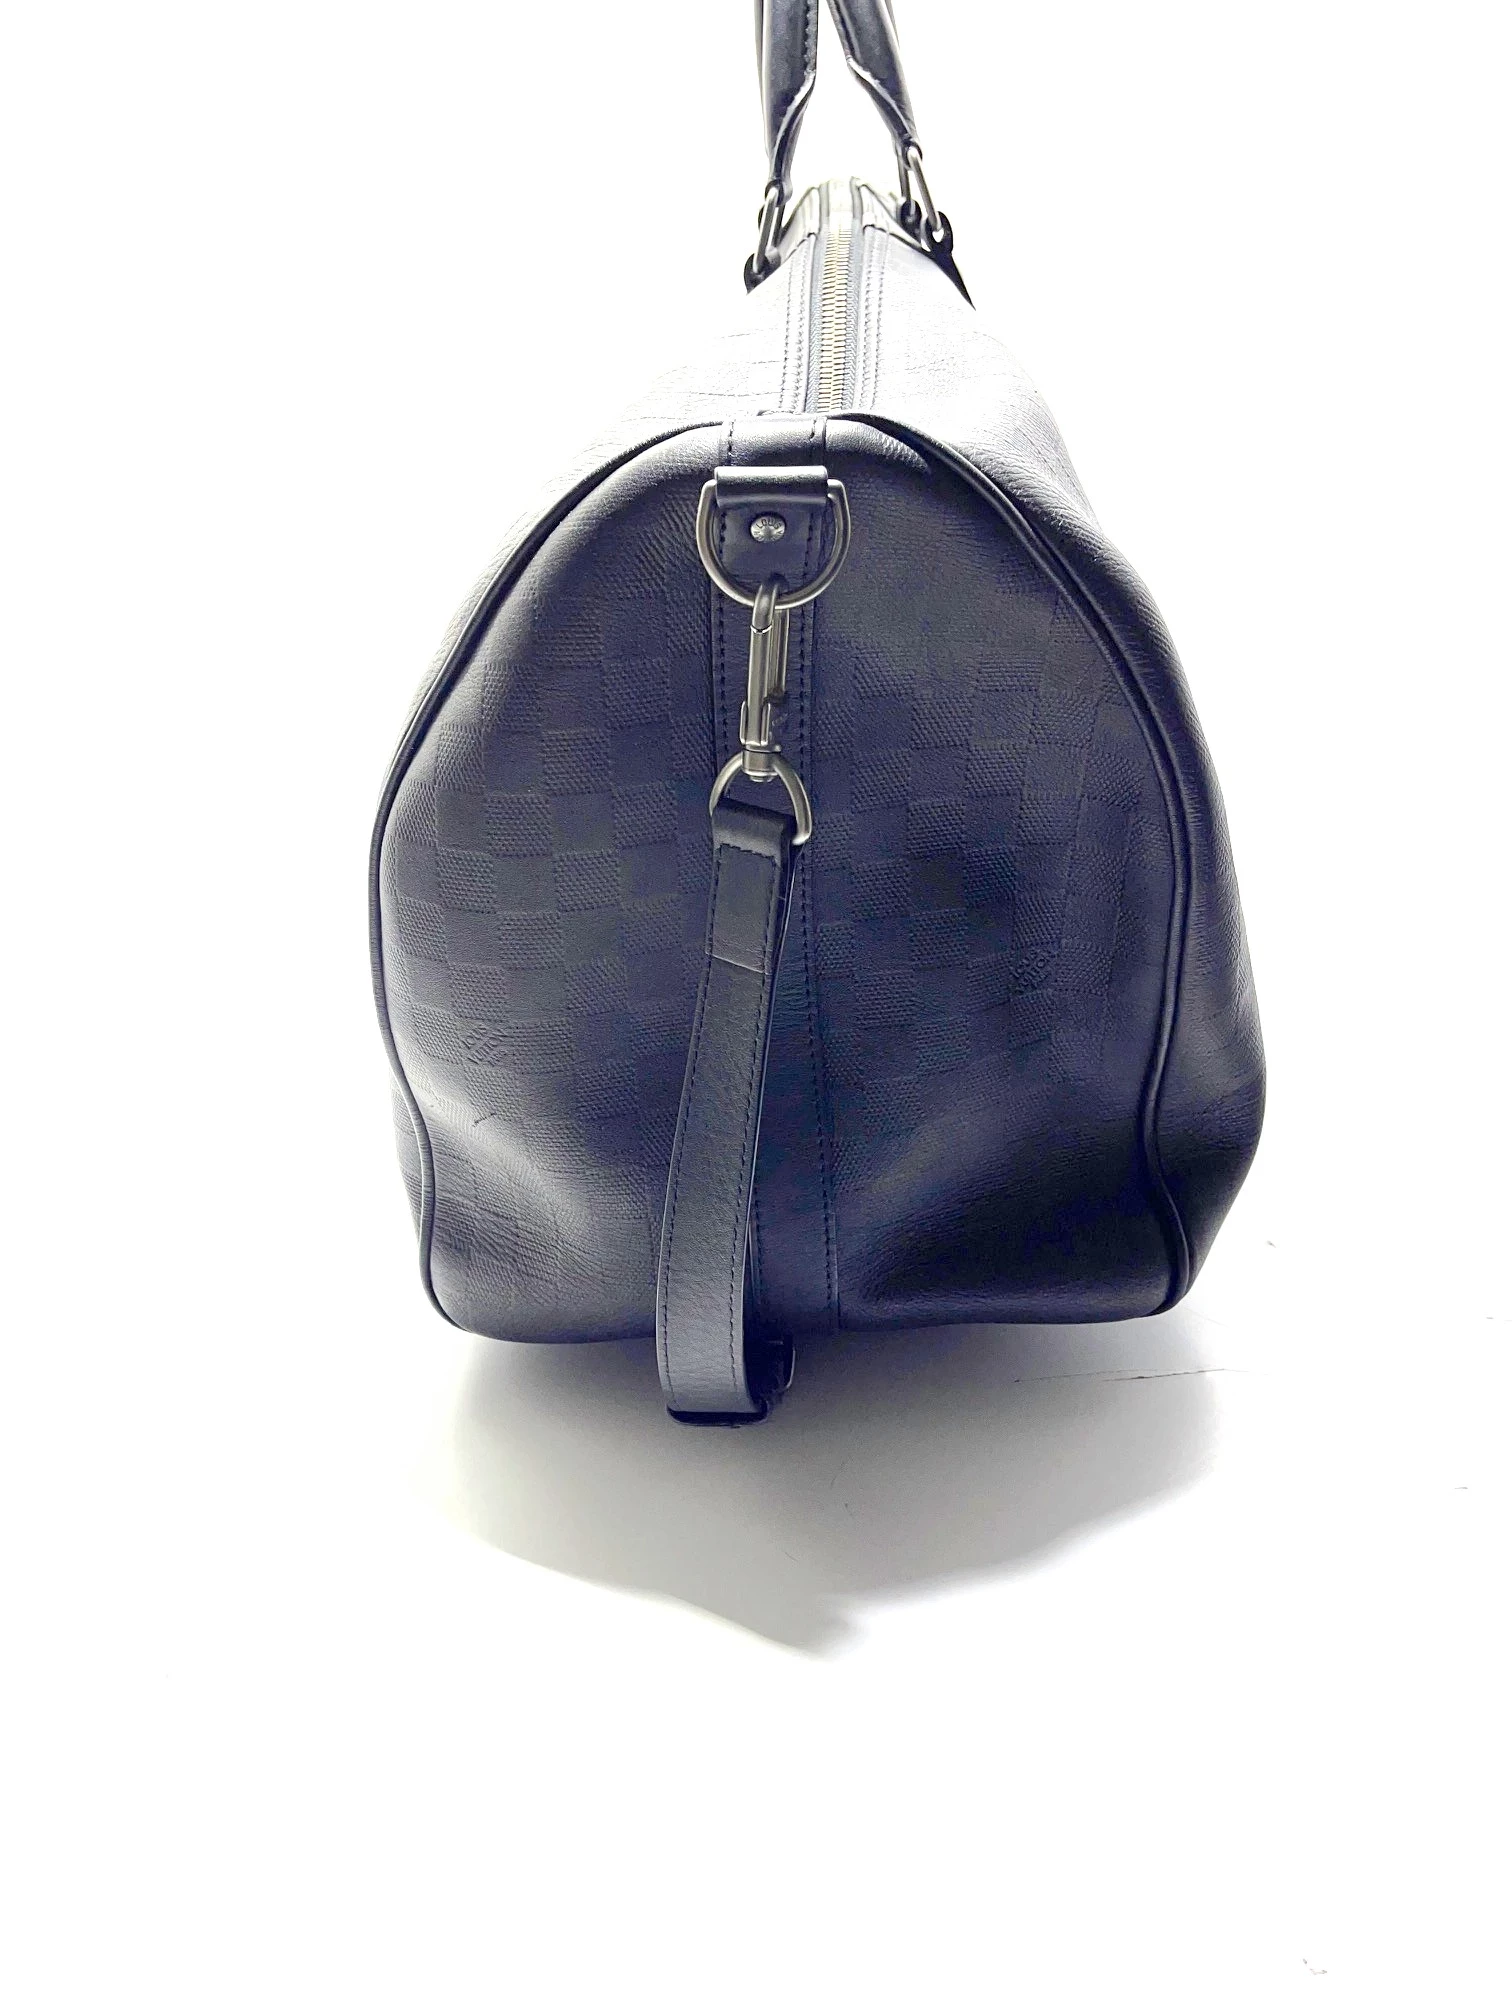 Modny Mix - Piękna duża torba podróżna Louis Vuitton